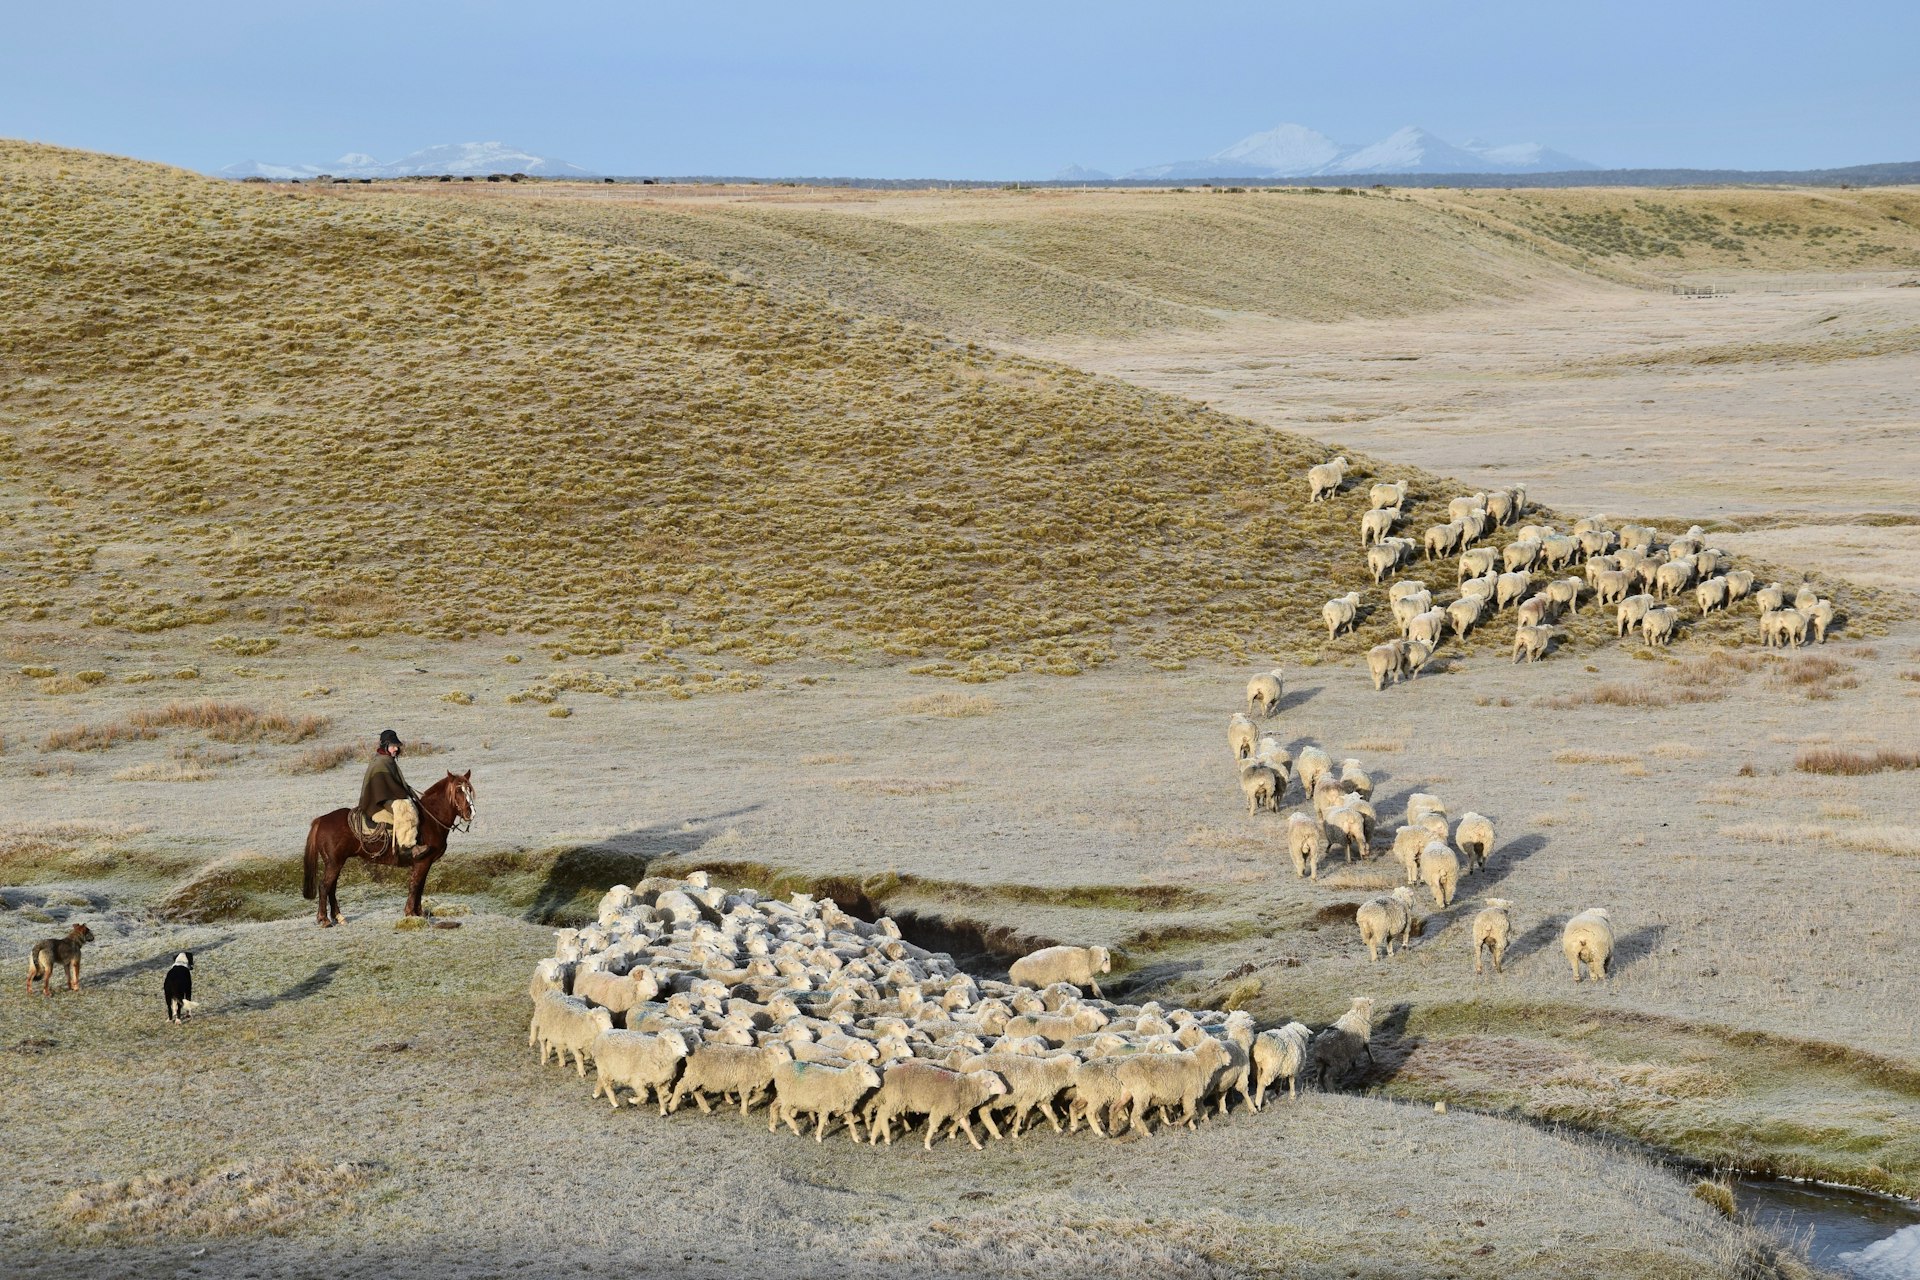 A local herding sheep on the The vast pampas of Porvenir